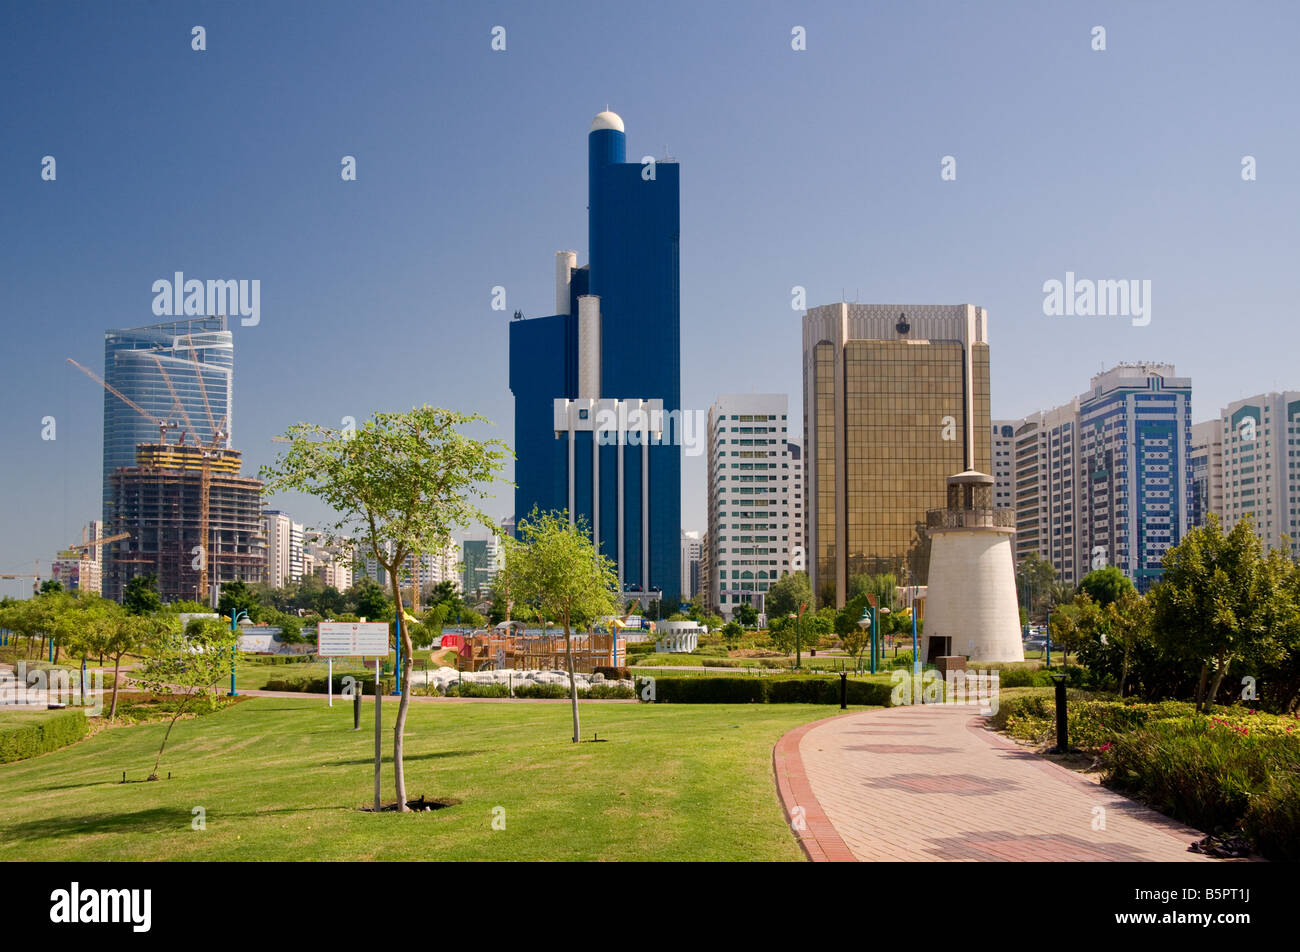 Abu Dhabi, UAE with skyscrapers Stock Photo